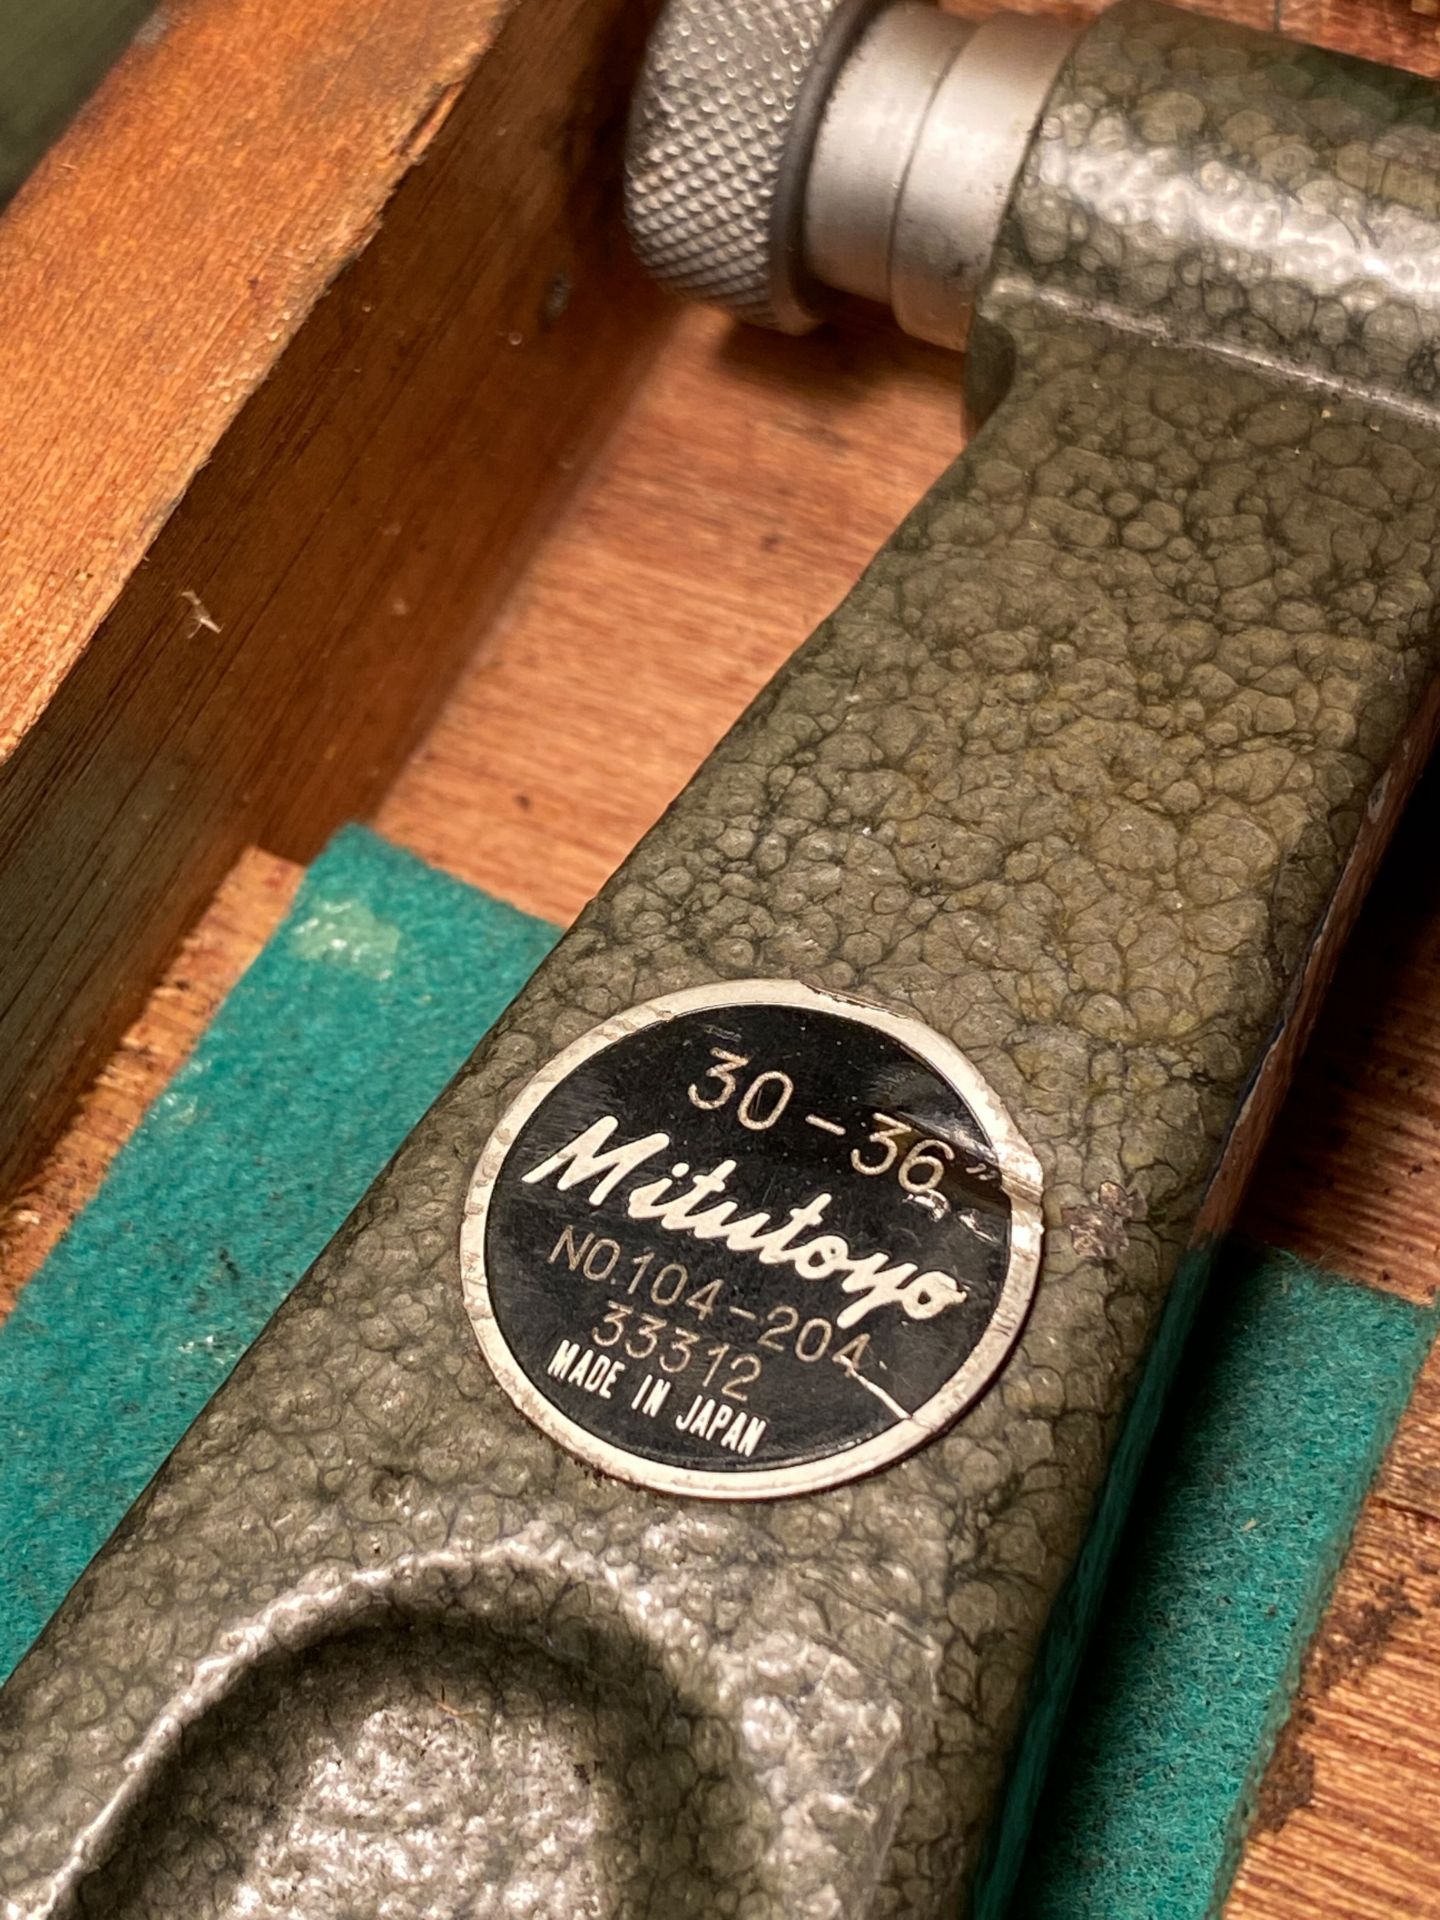 Mitutoyo 30"-36" Micrometer - Image 3 of 3